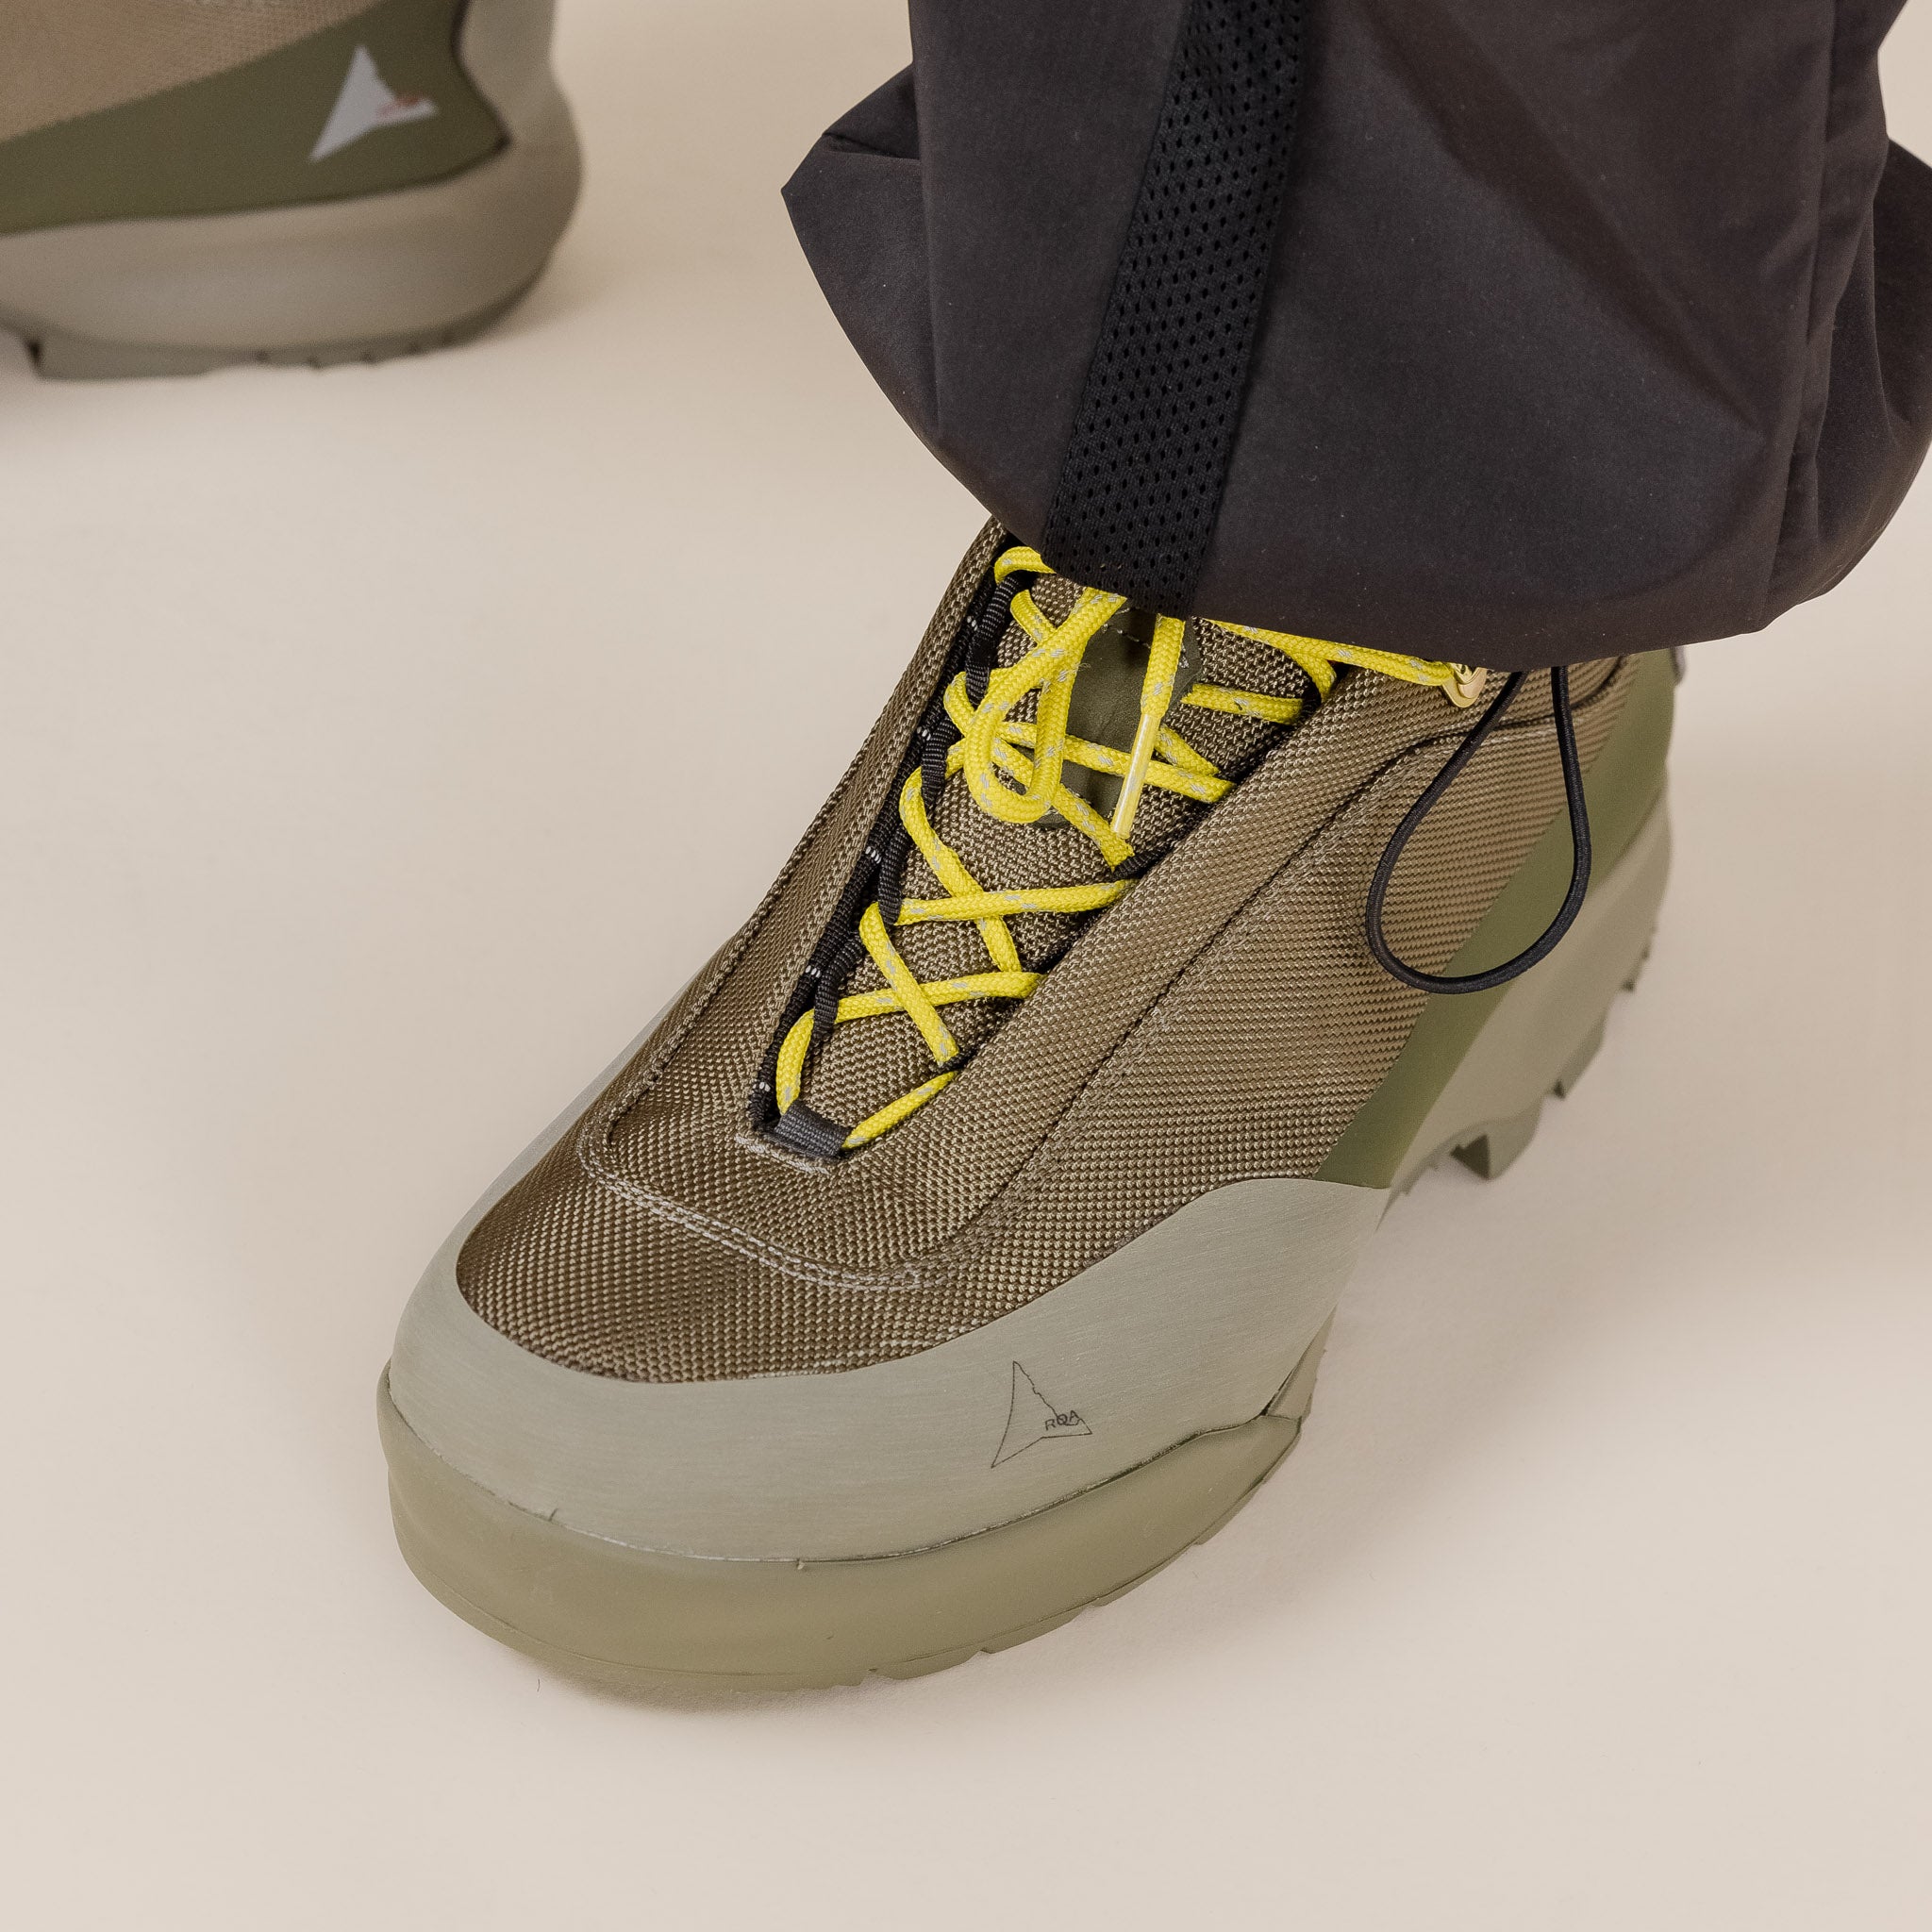 IFA03-101 Roa Hiking - Cingino Approach Shoe - Sage Green "roa hiking stockists" "roa x j.l-a.l" "roa cingino stockists" "roa hiking" "roa footwear"